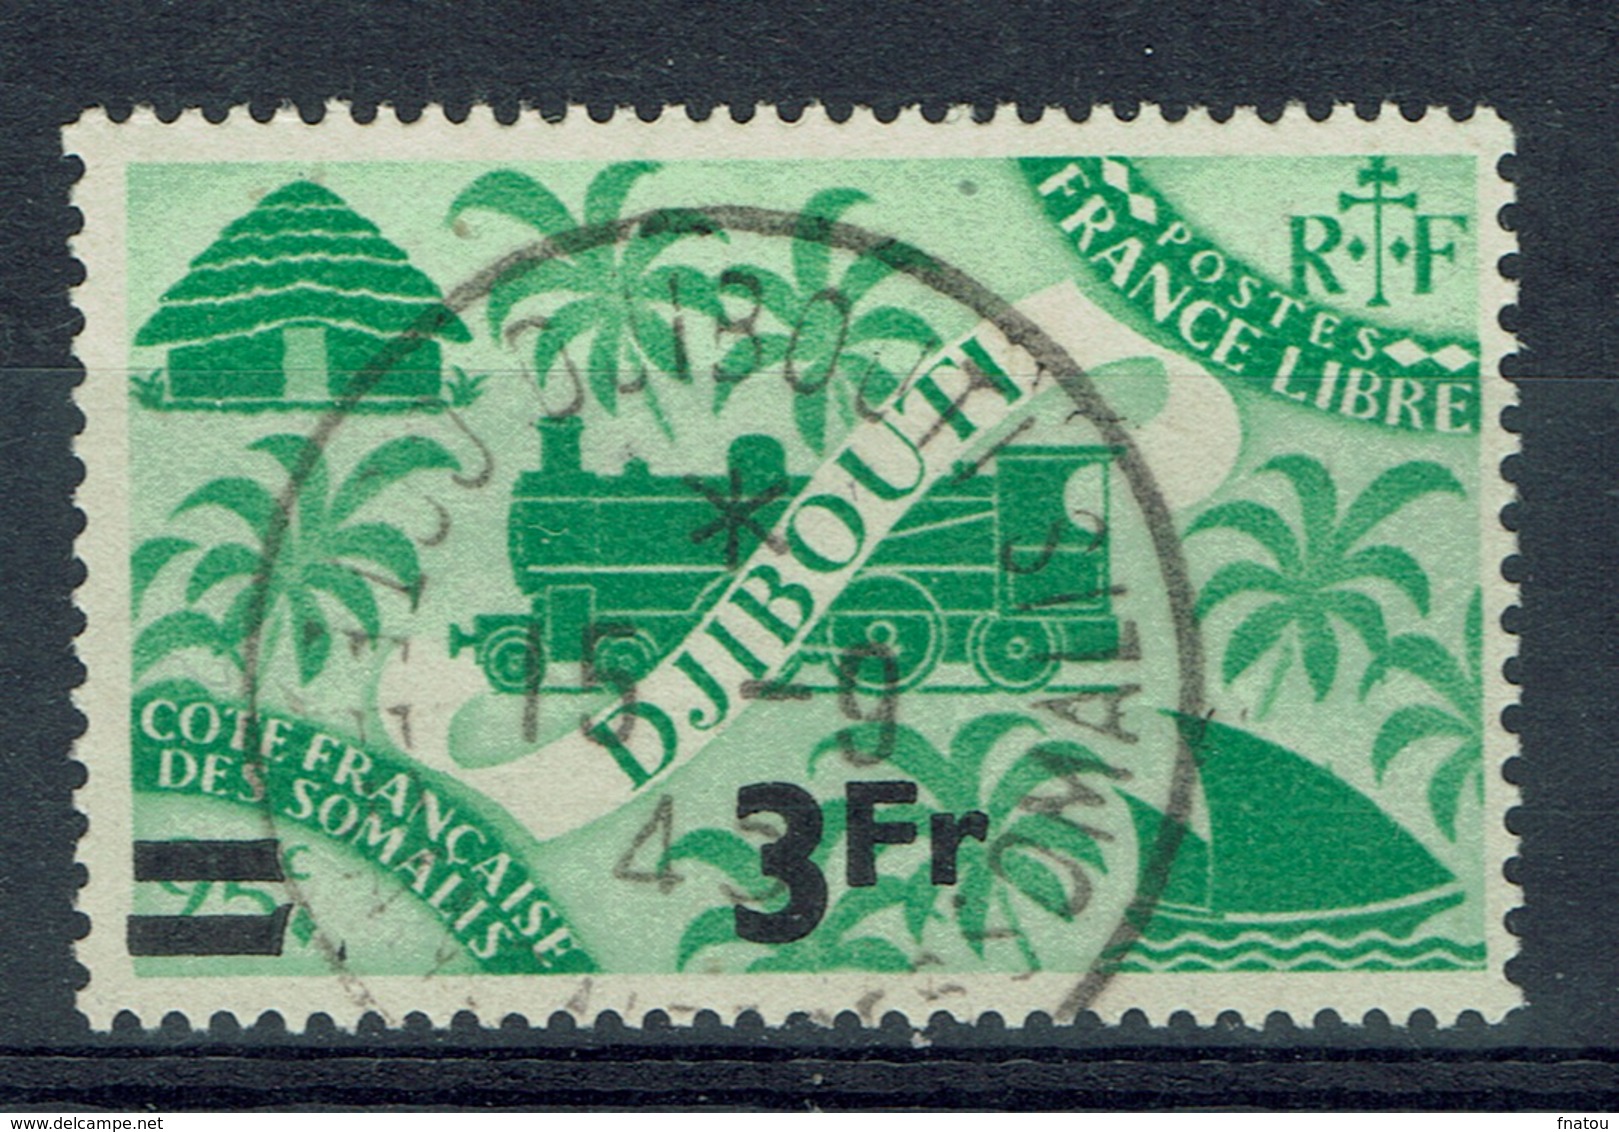 French Somali Coast, 3fr/25c., London Set Overprint, 1945, VFU - Usati